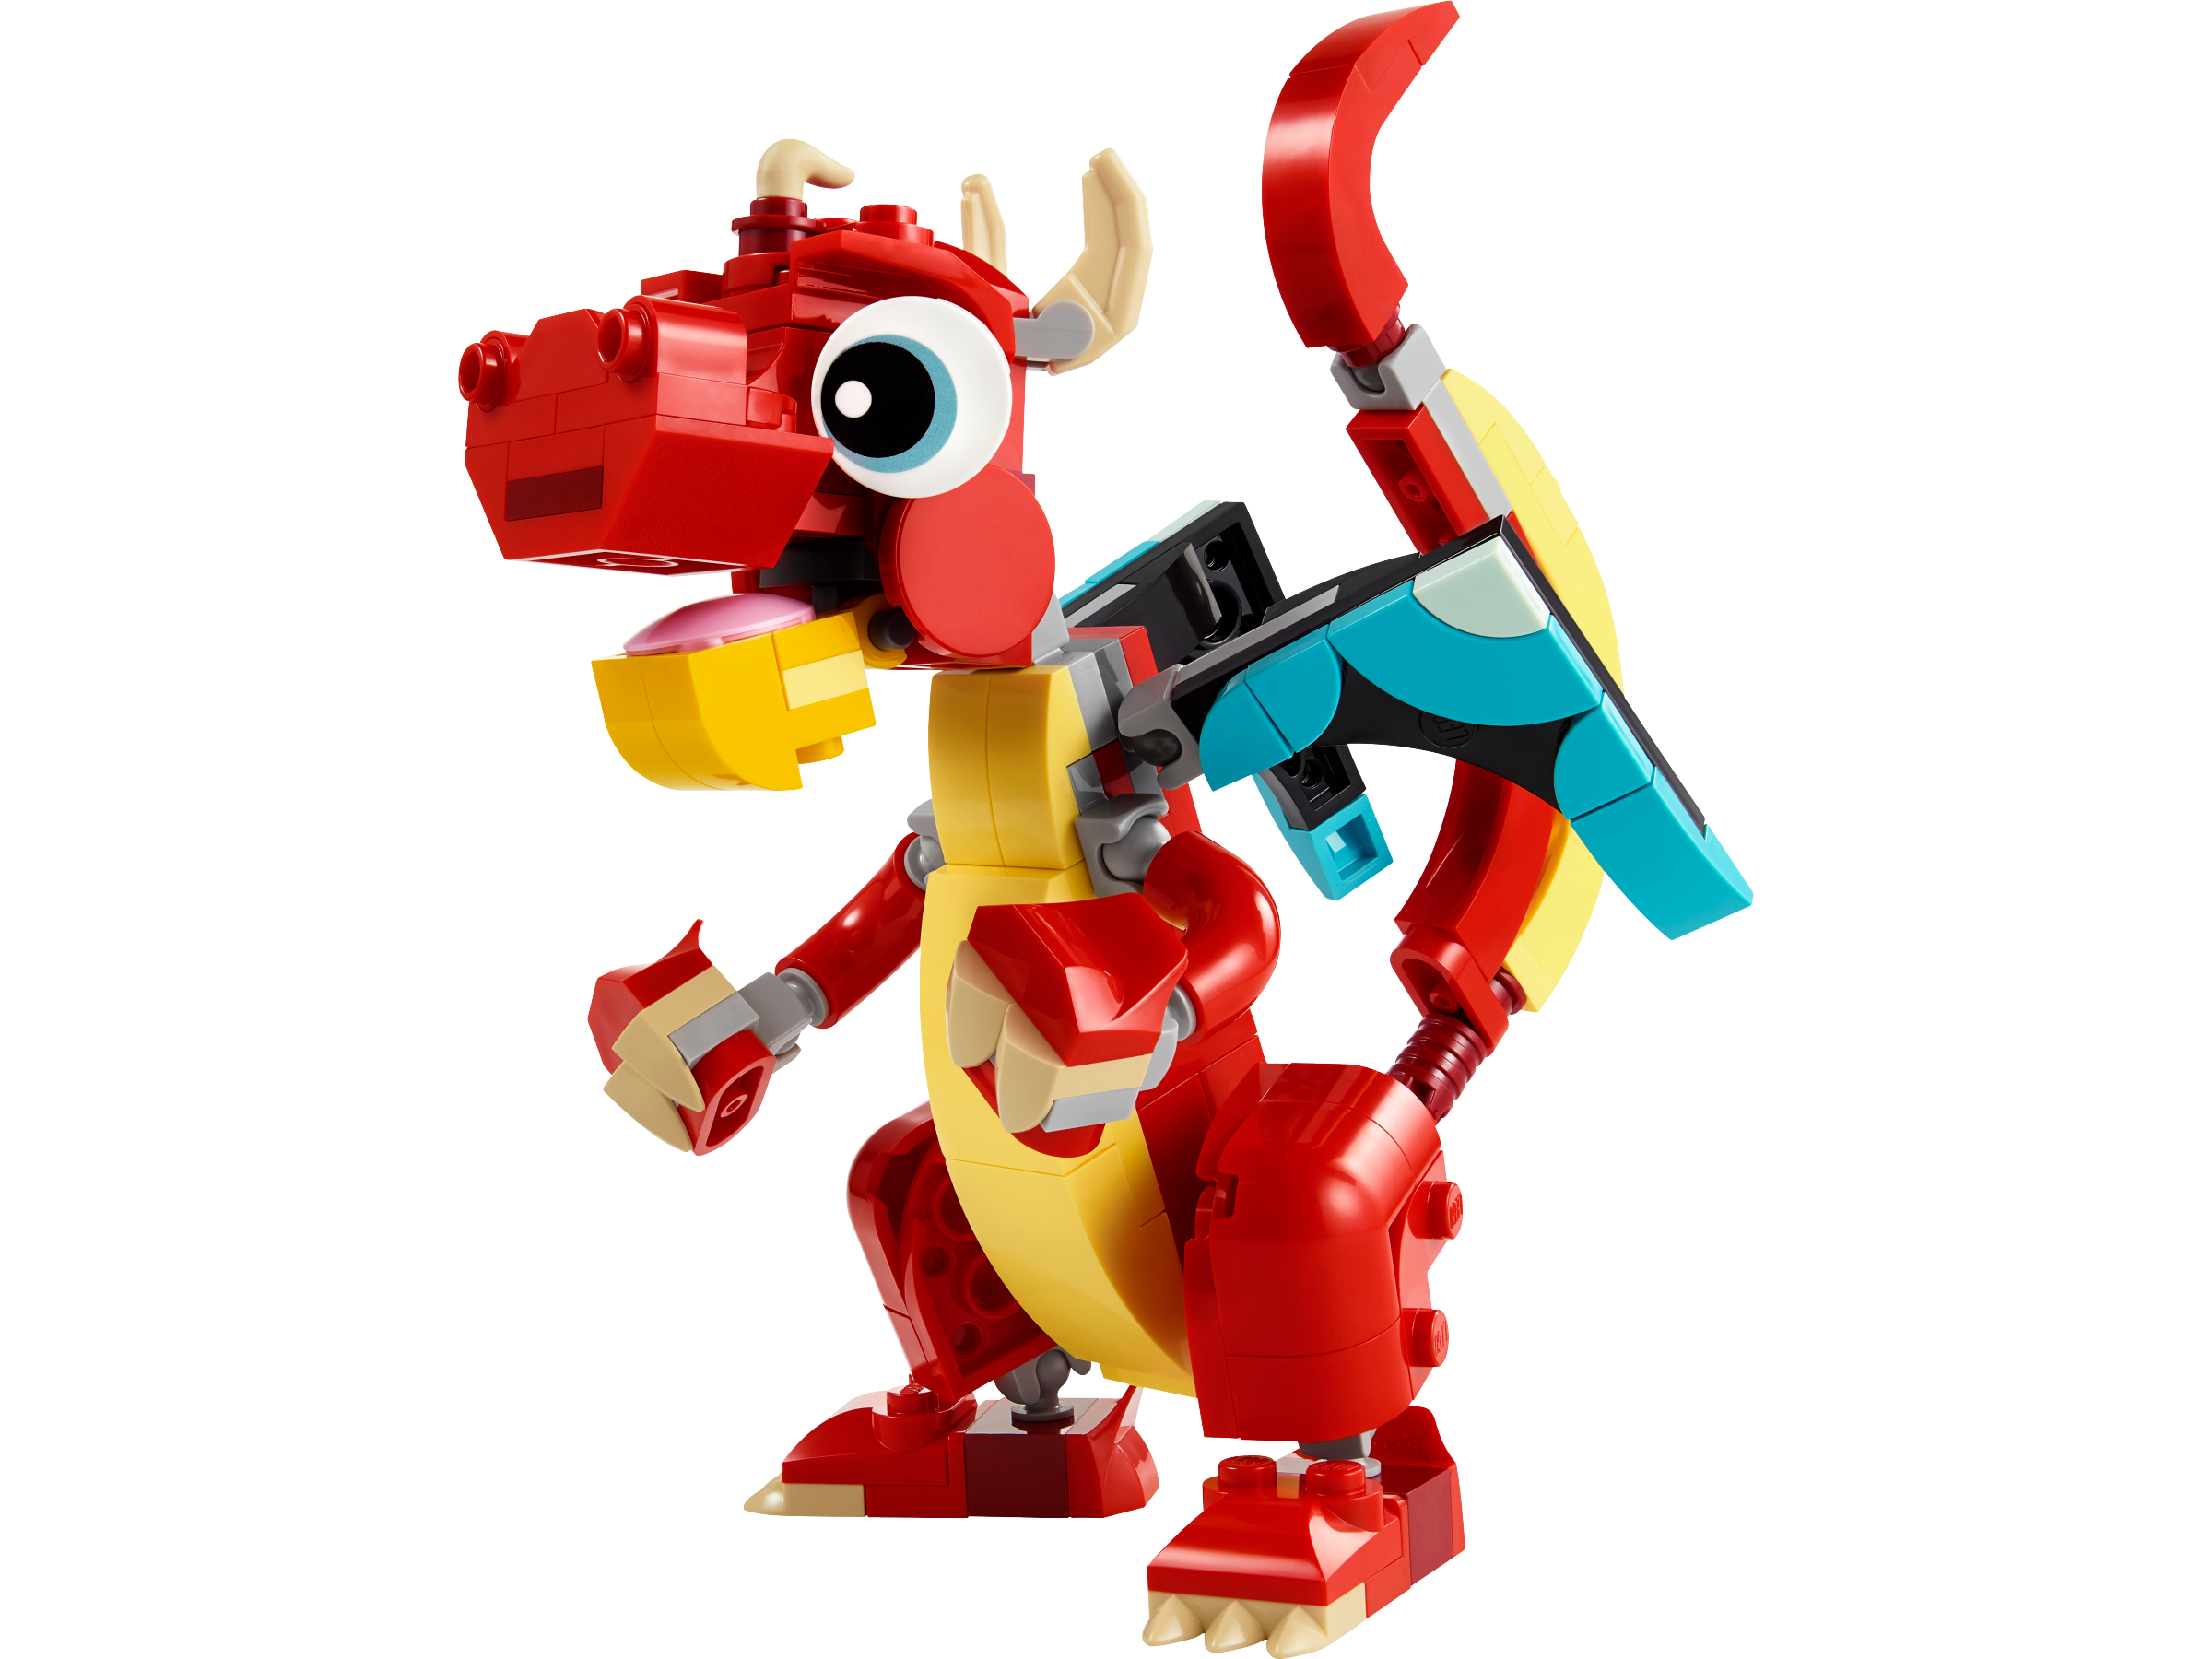 LEGO Robot Warrior Minifigure - Brick Land